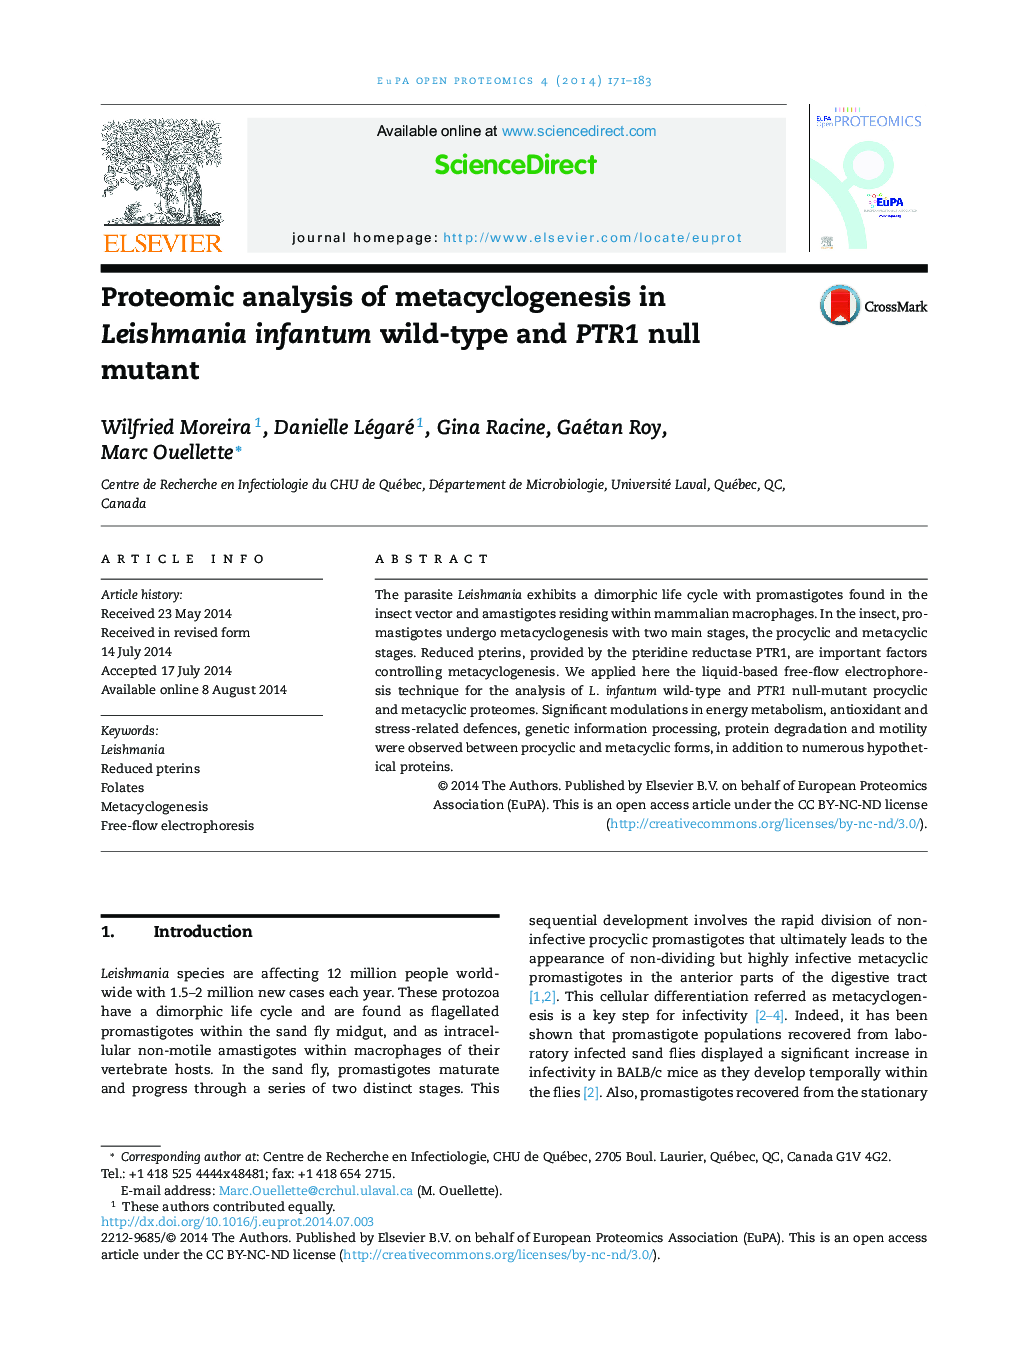 Proteomic analysis of metacyclogenesis in Leishmania infantum wild-type and PTR1 null mutant